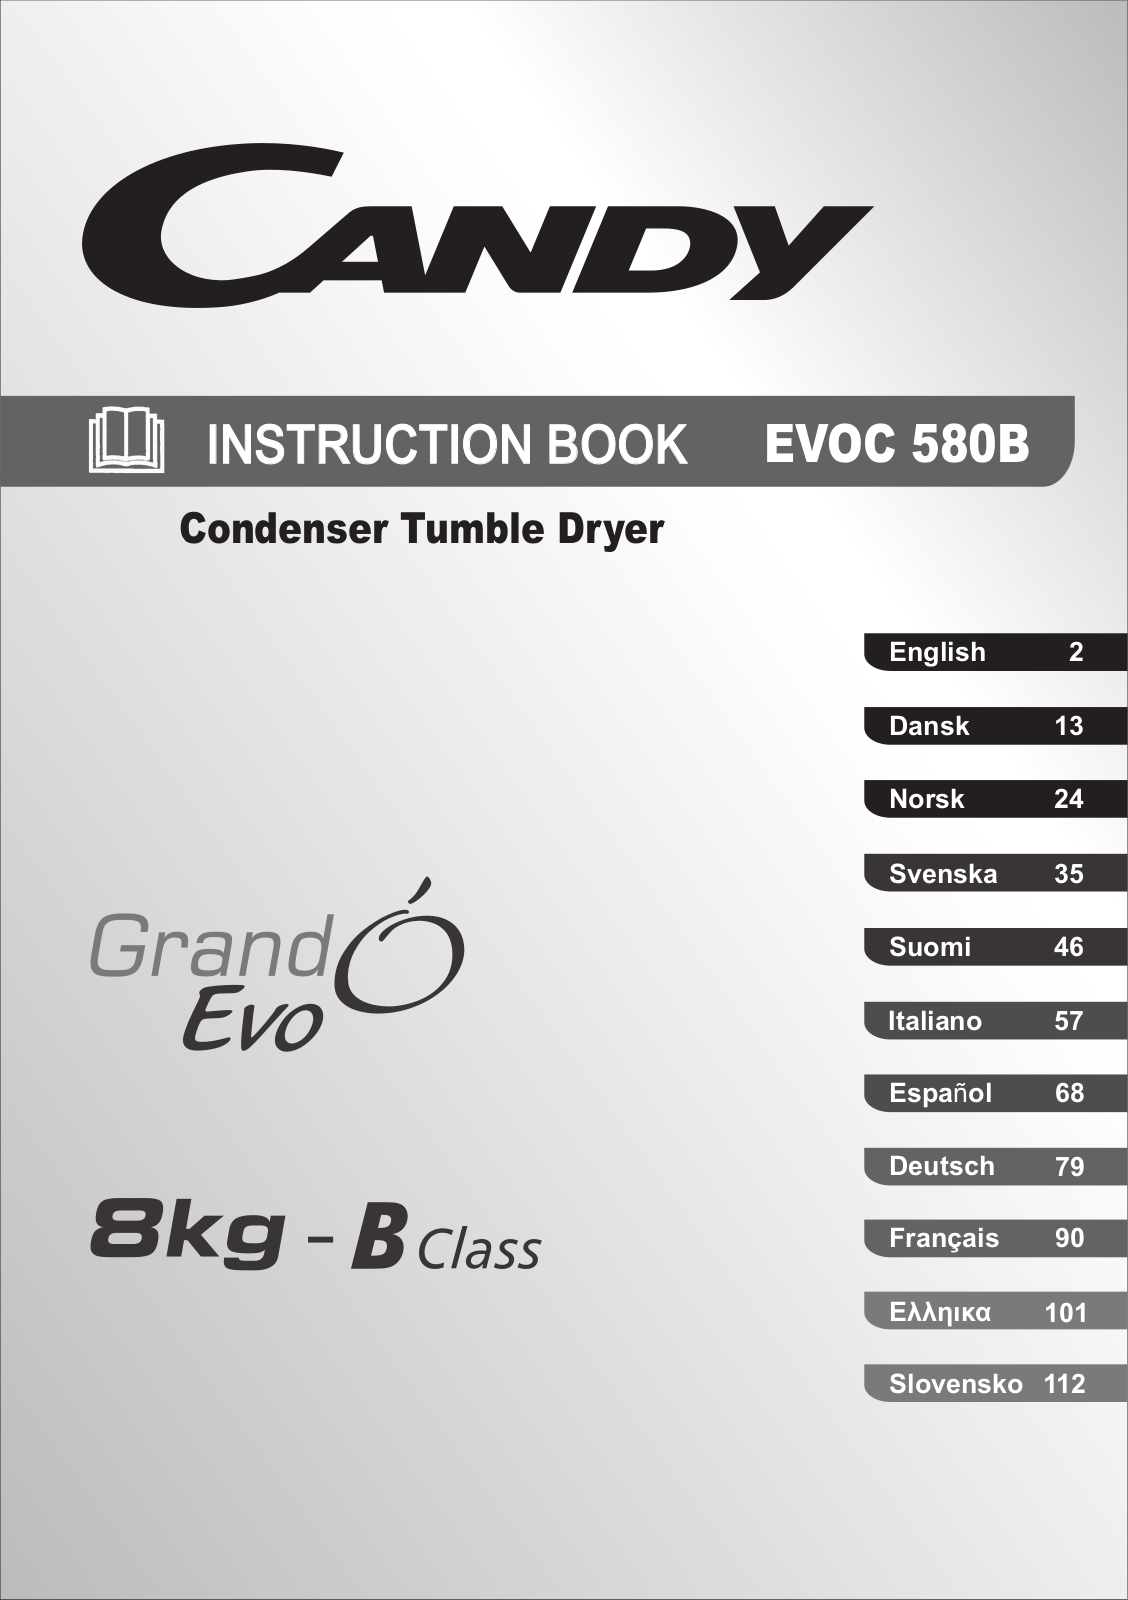 Candy EVOC 581 B, EVOC 580 B User Manual